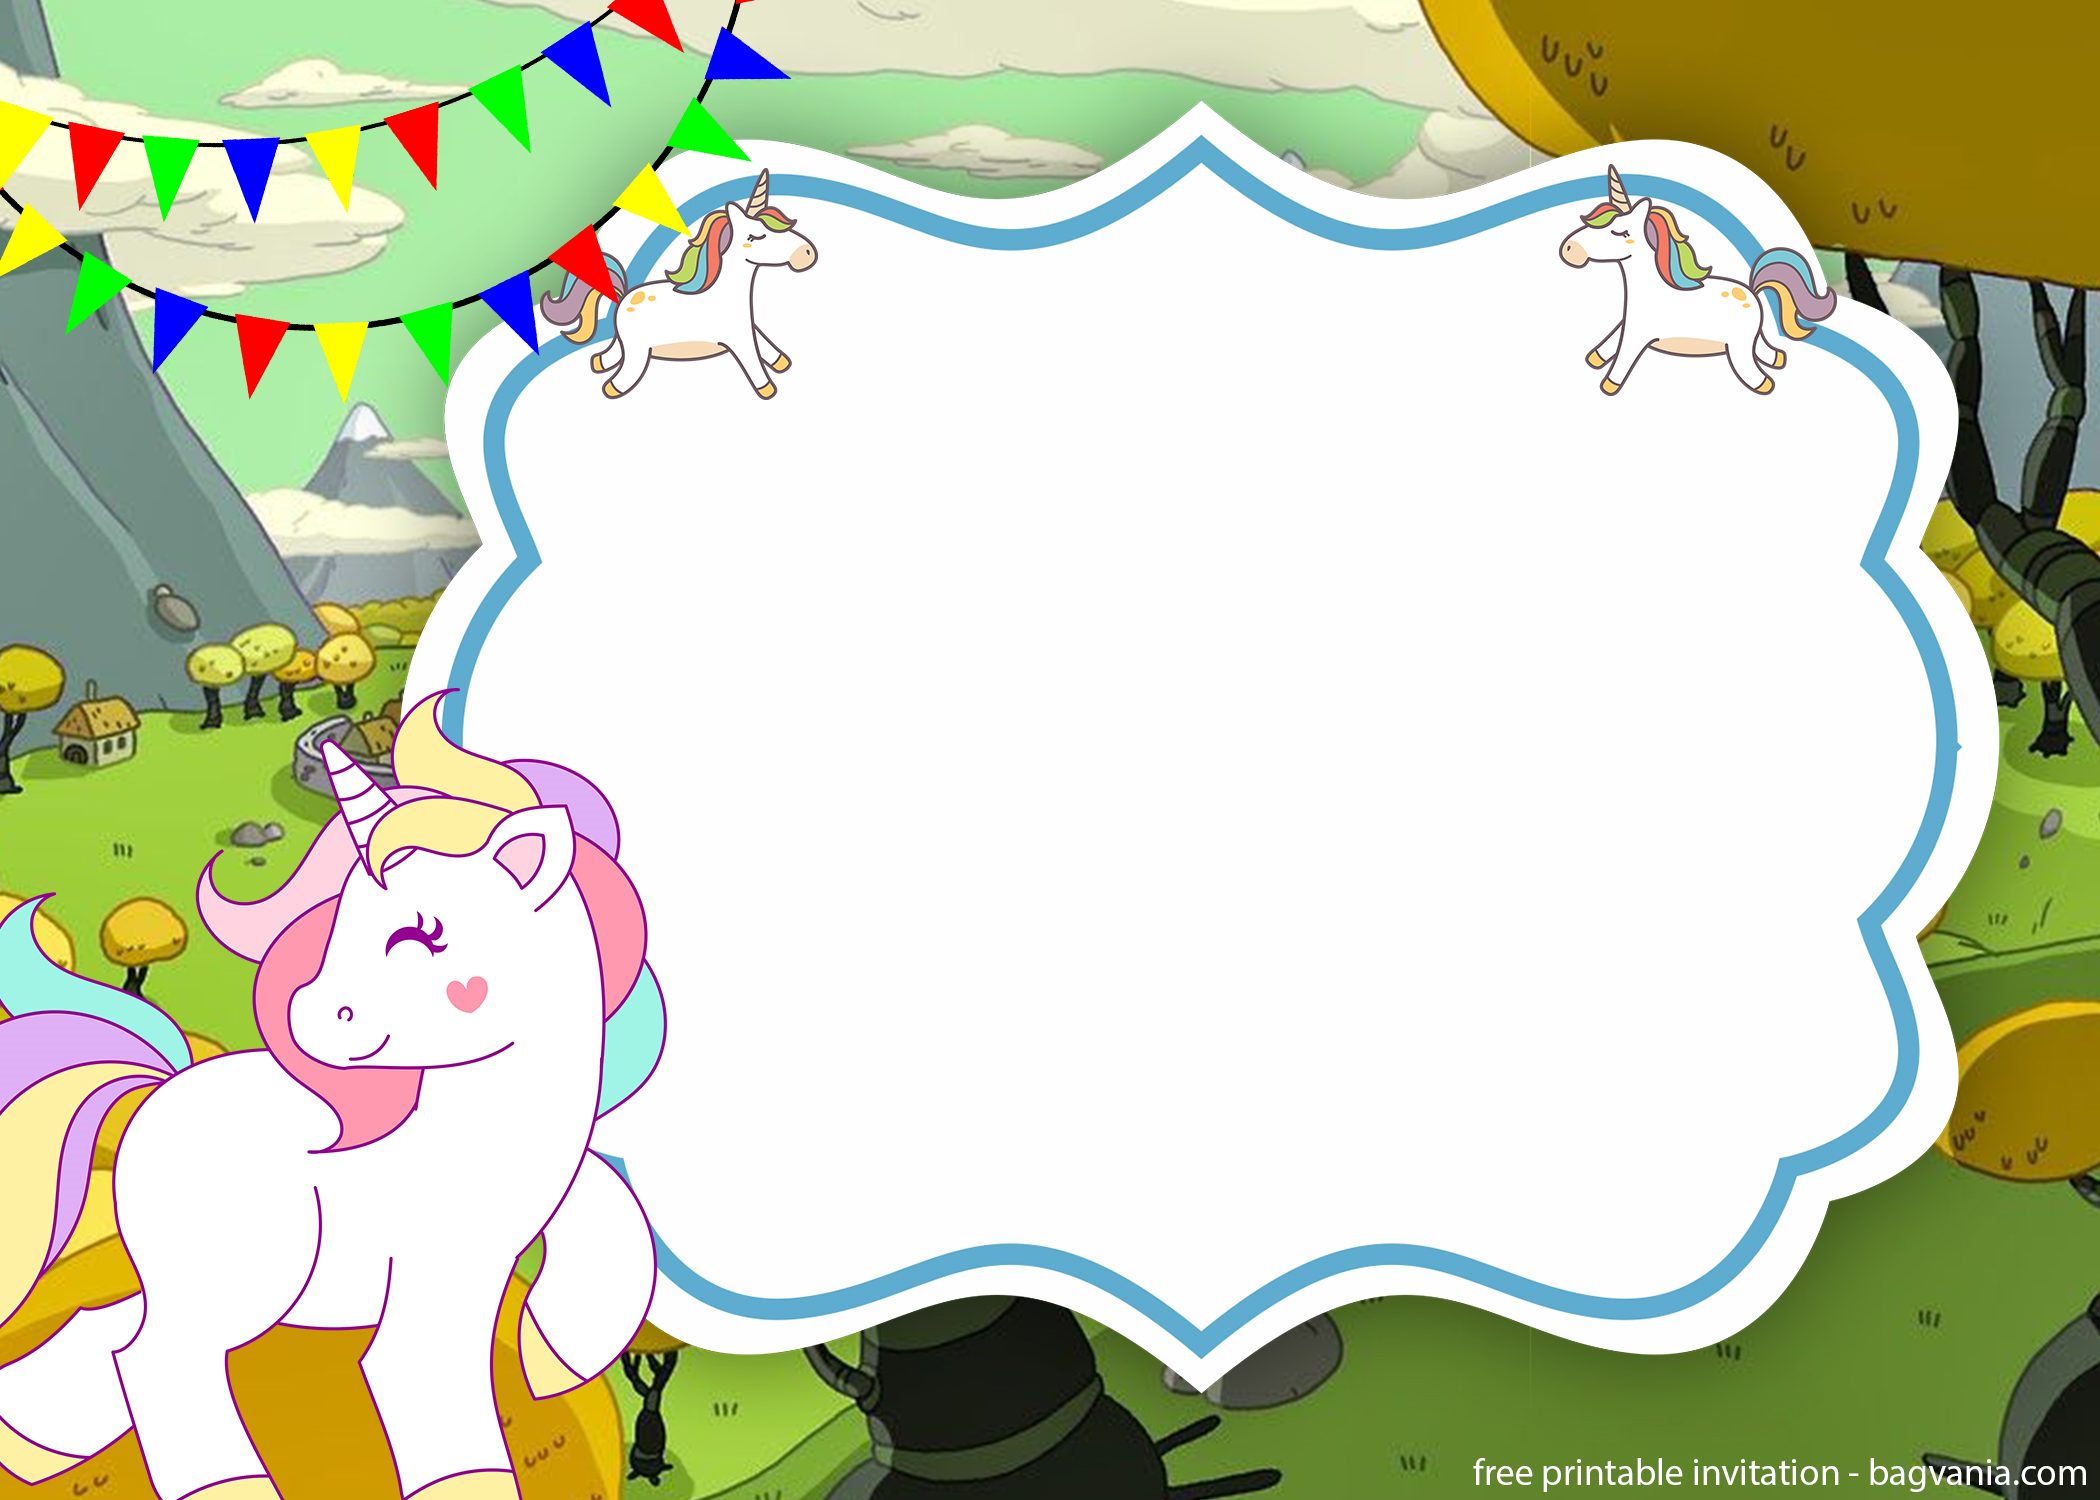 what-is-your-unicorn-name-free-printable-unicorn-themed-birthday